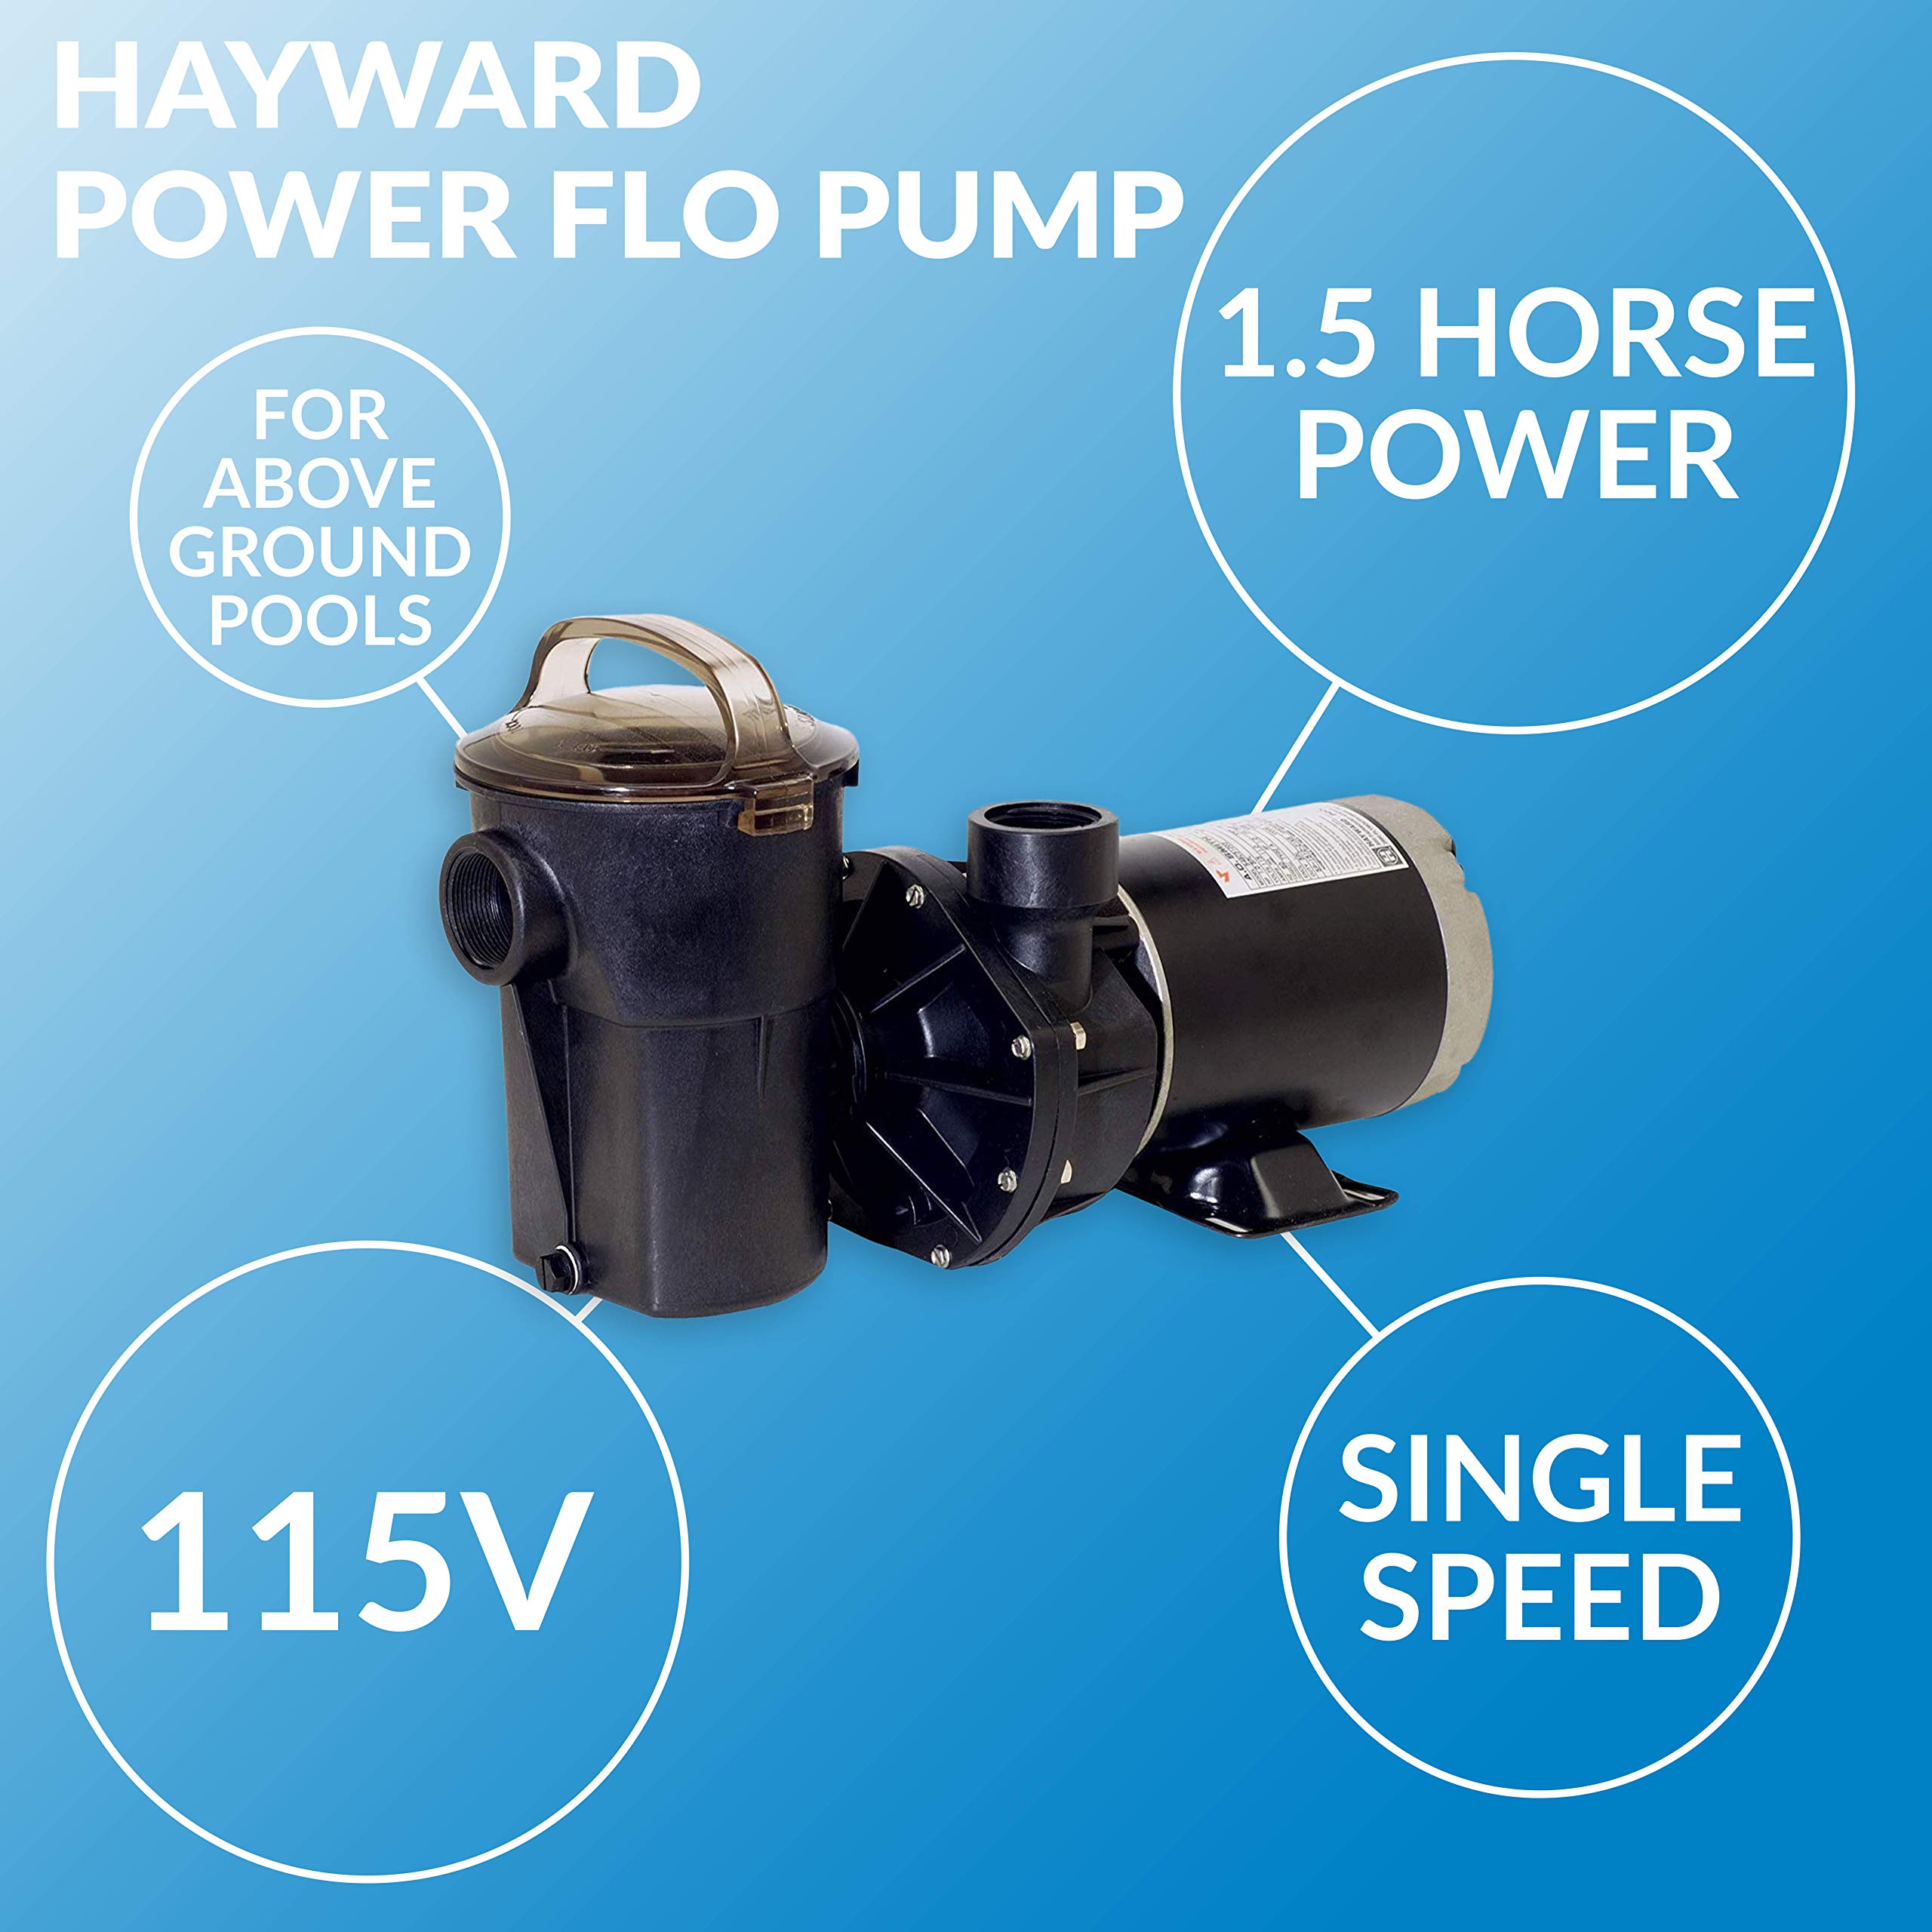 Hayward W3SP1580X15 PowerFlo Pool Pump for Above Ground Pools, 1.5 HP